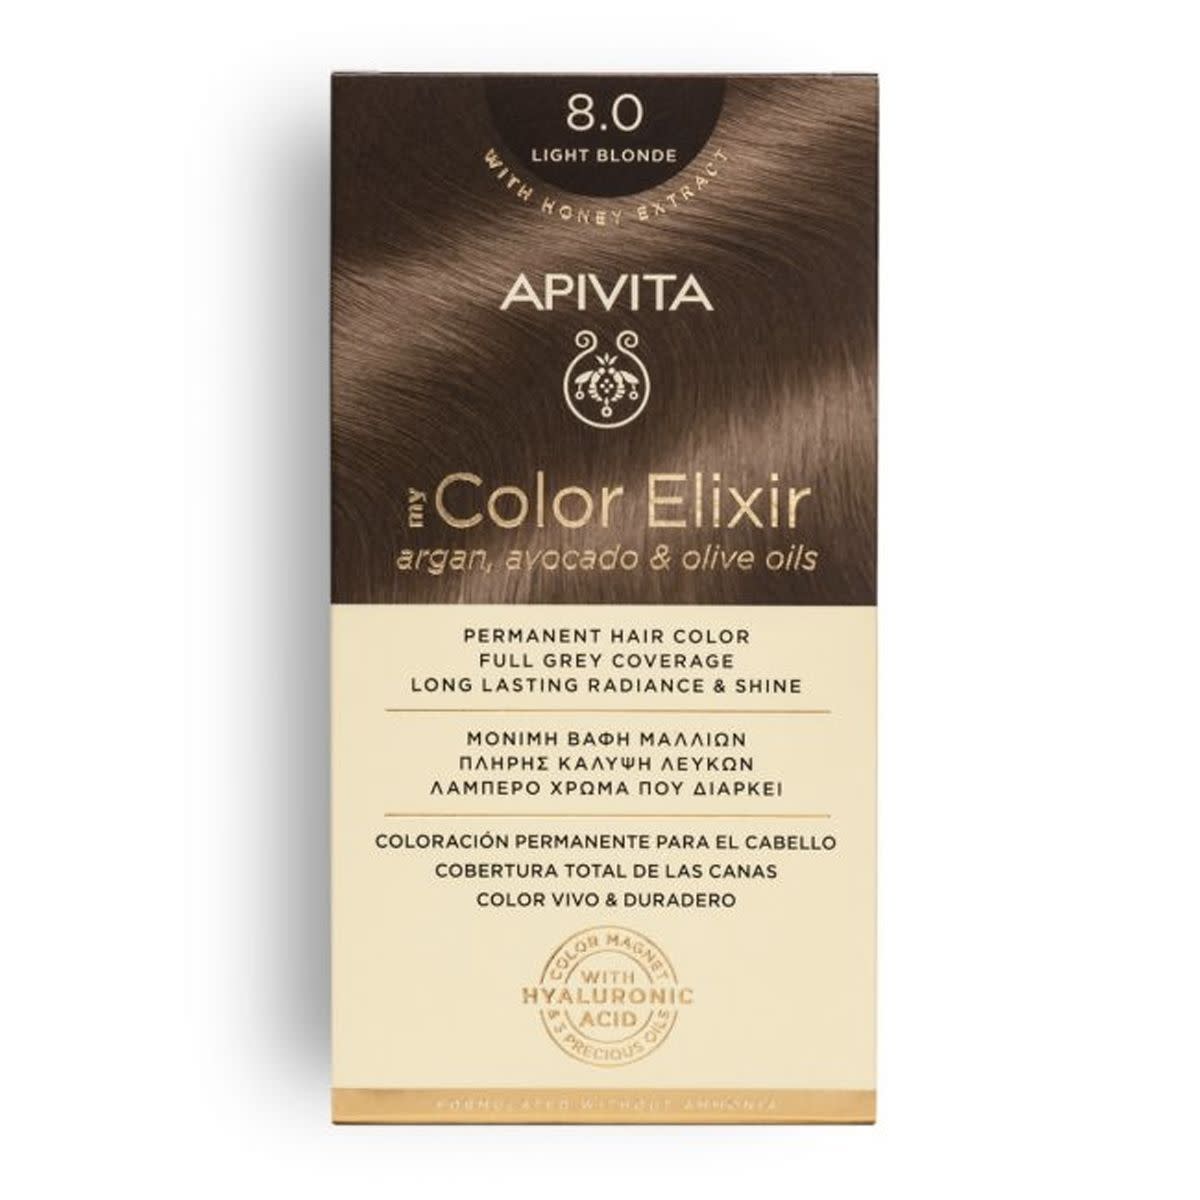 976769087 - Apivita My Color Elixir tinta capelli 8.0 biondo chiaro - 4733741_1.jpg